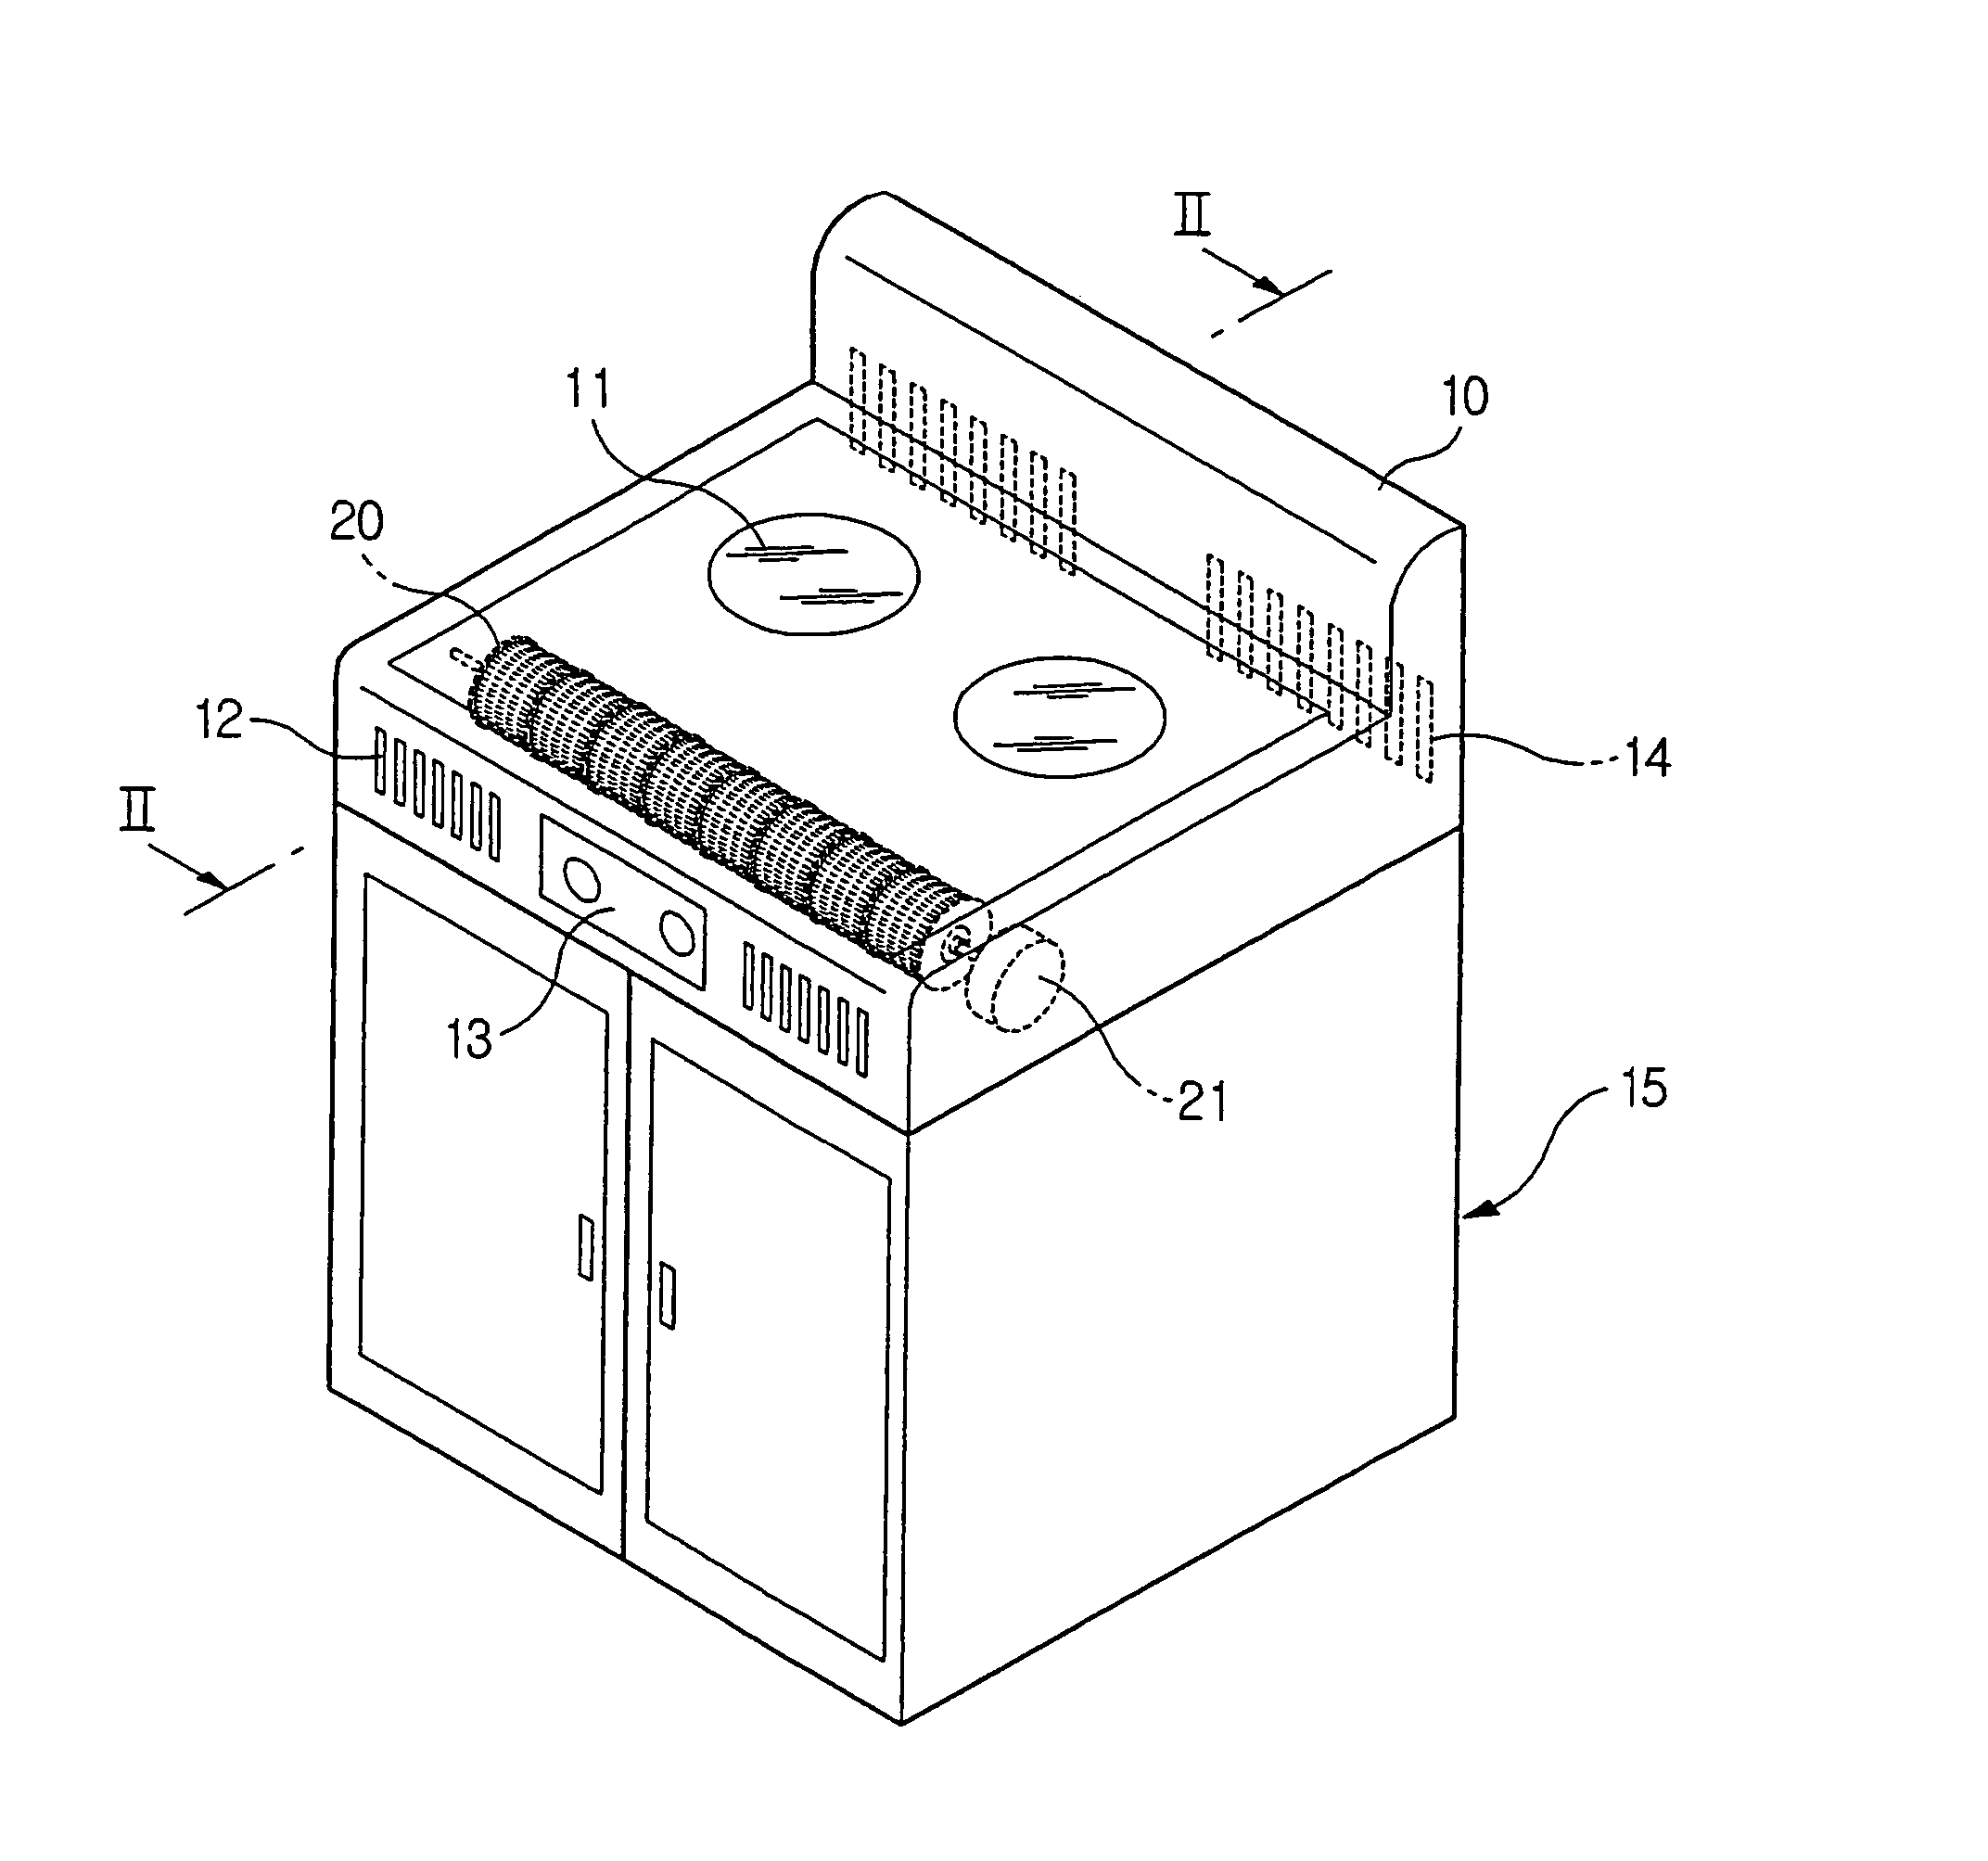 Composite cooking apparatus